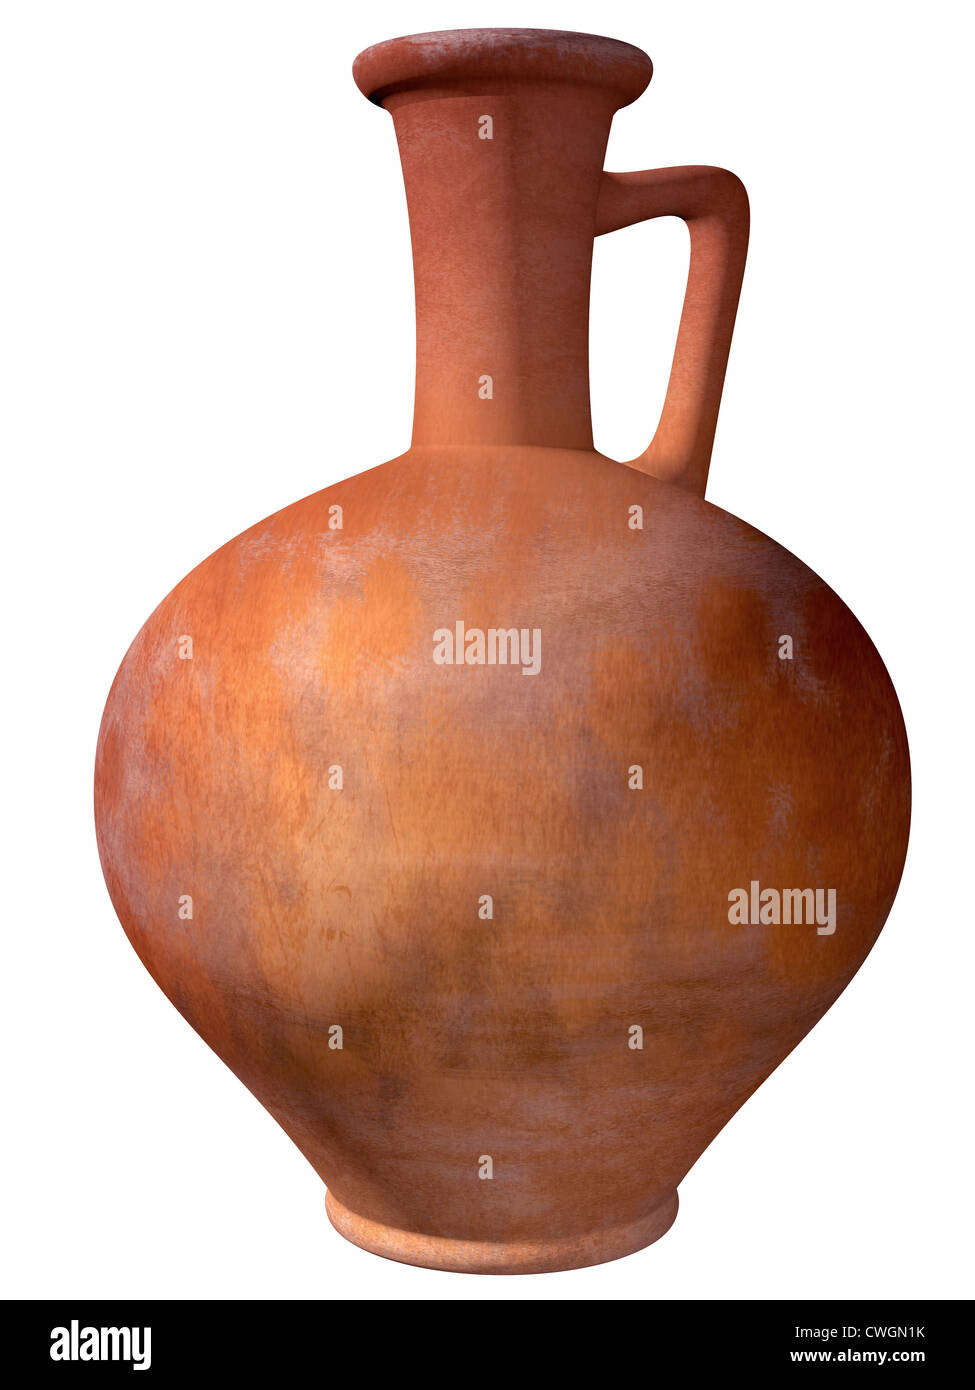 Isolated illustration of an ancient Roman wine jug Stock Photo